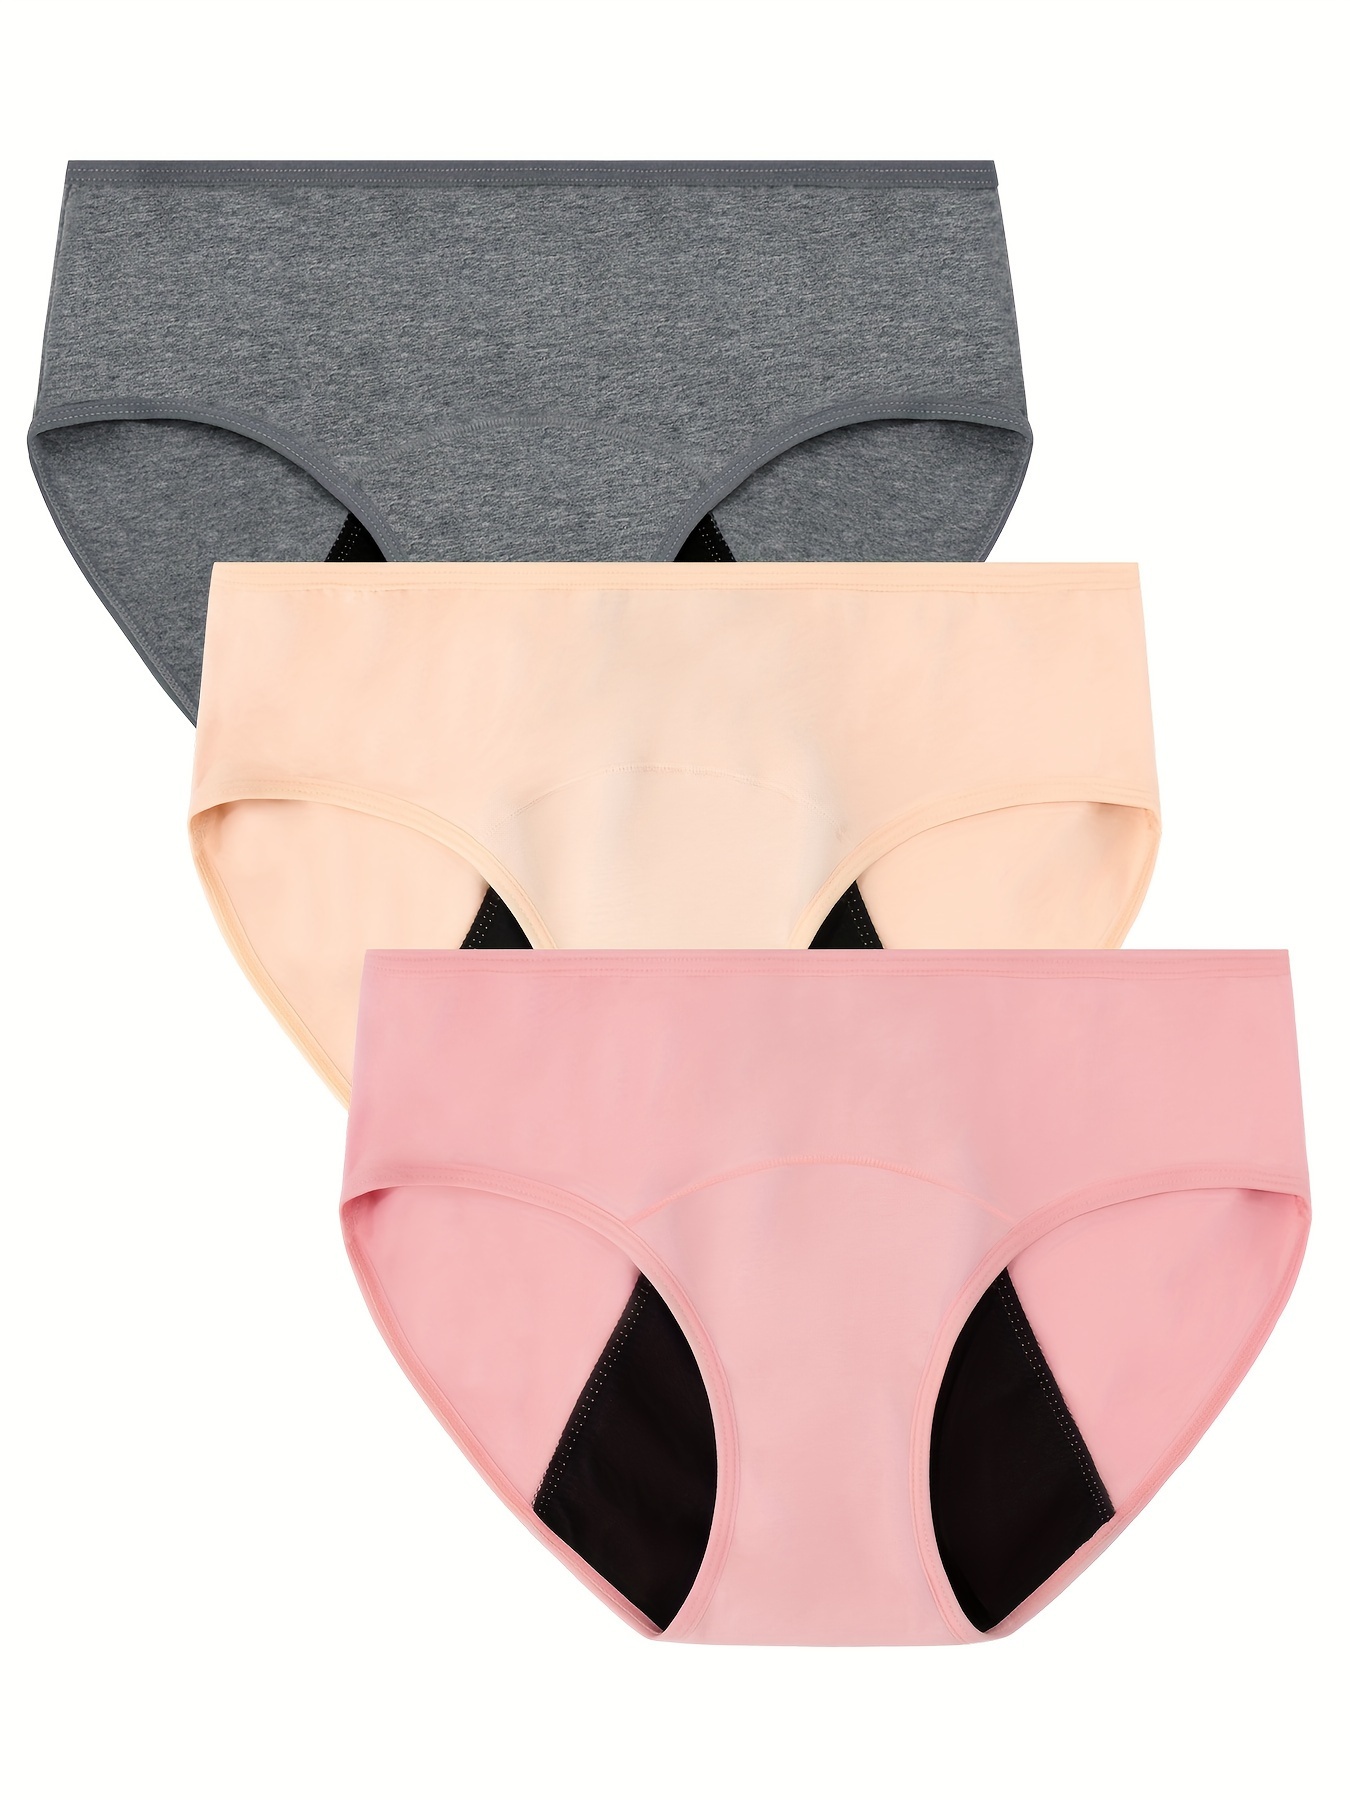 comfortlab Pinkiskin Cotton Menstrual Period Panty